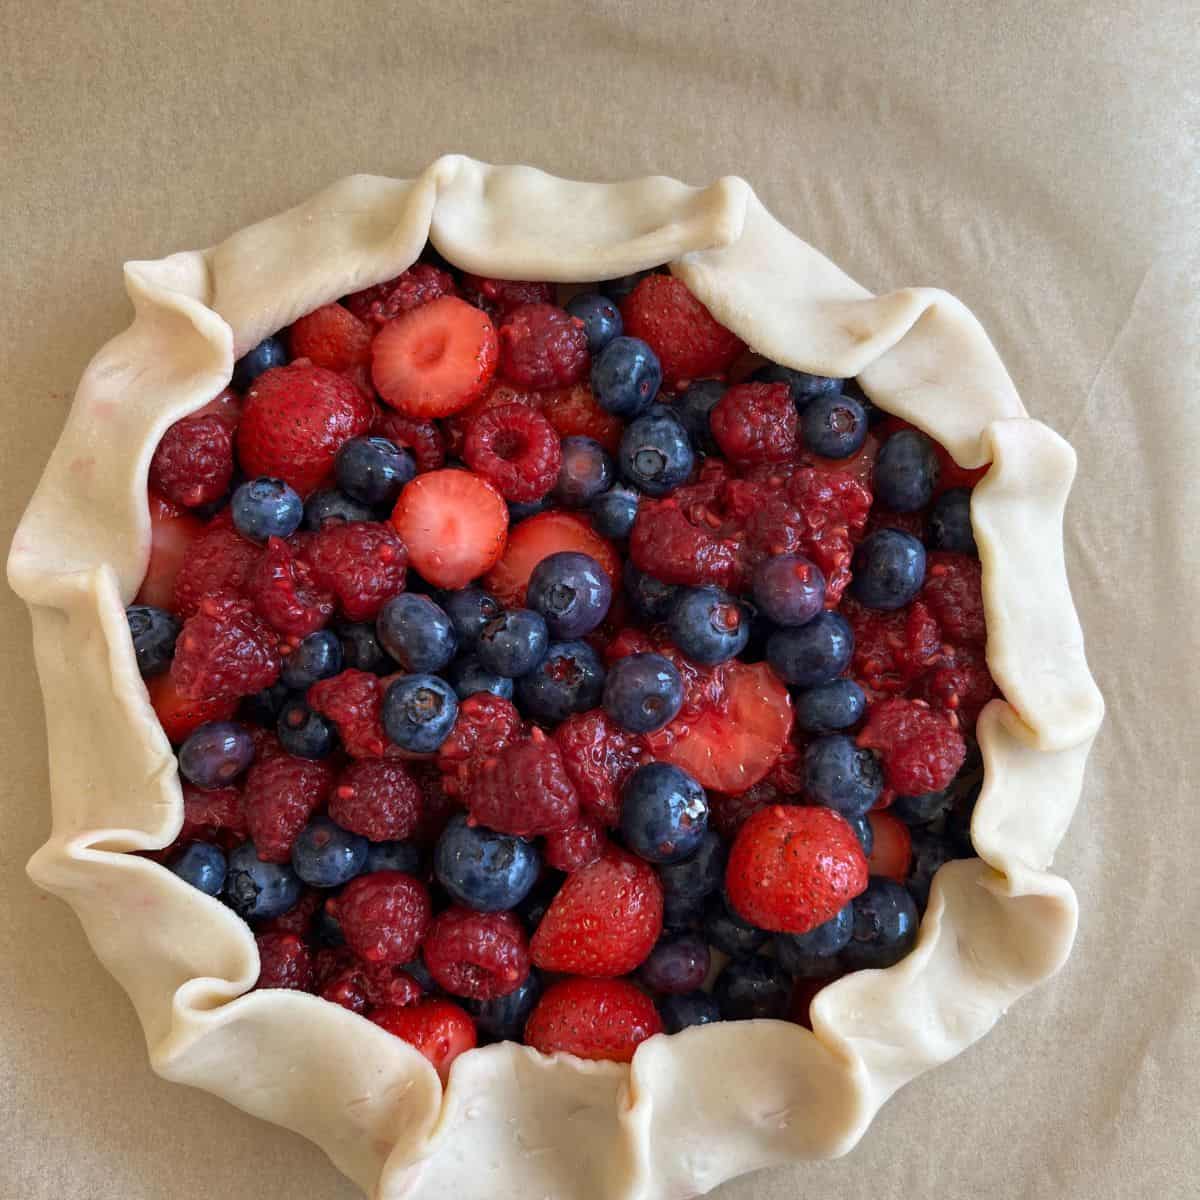 uncooked pie dough folded over berries